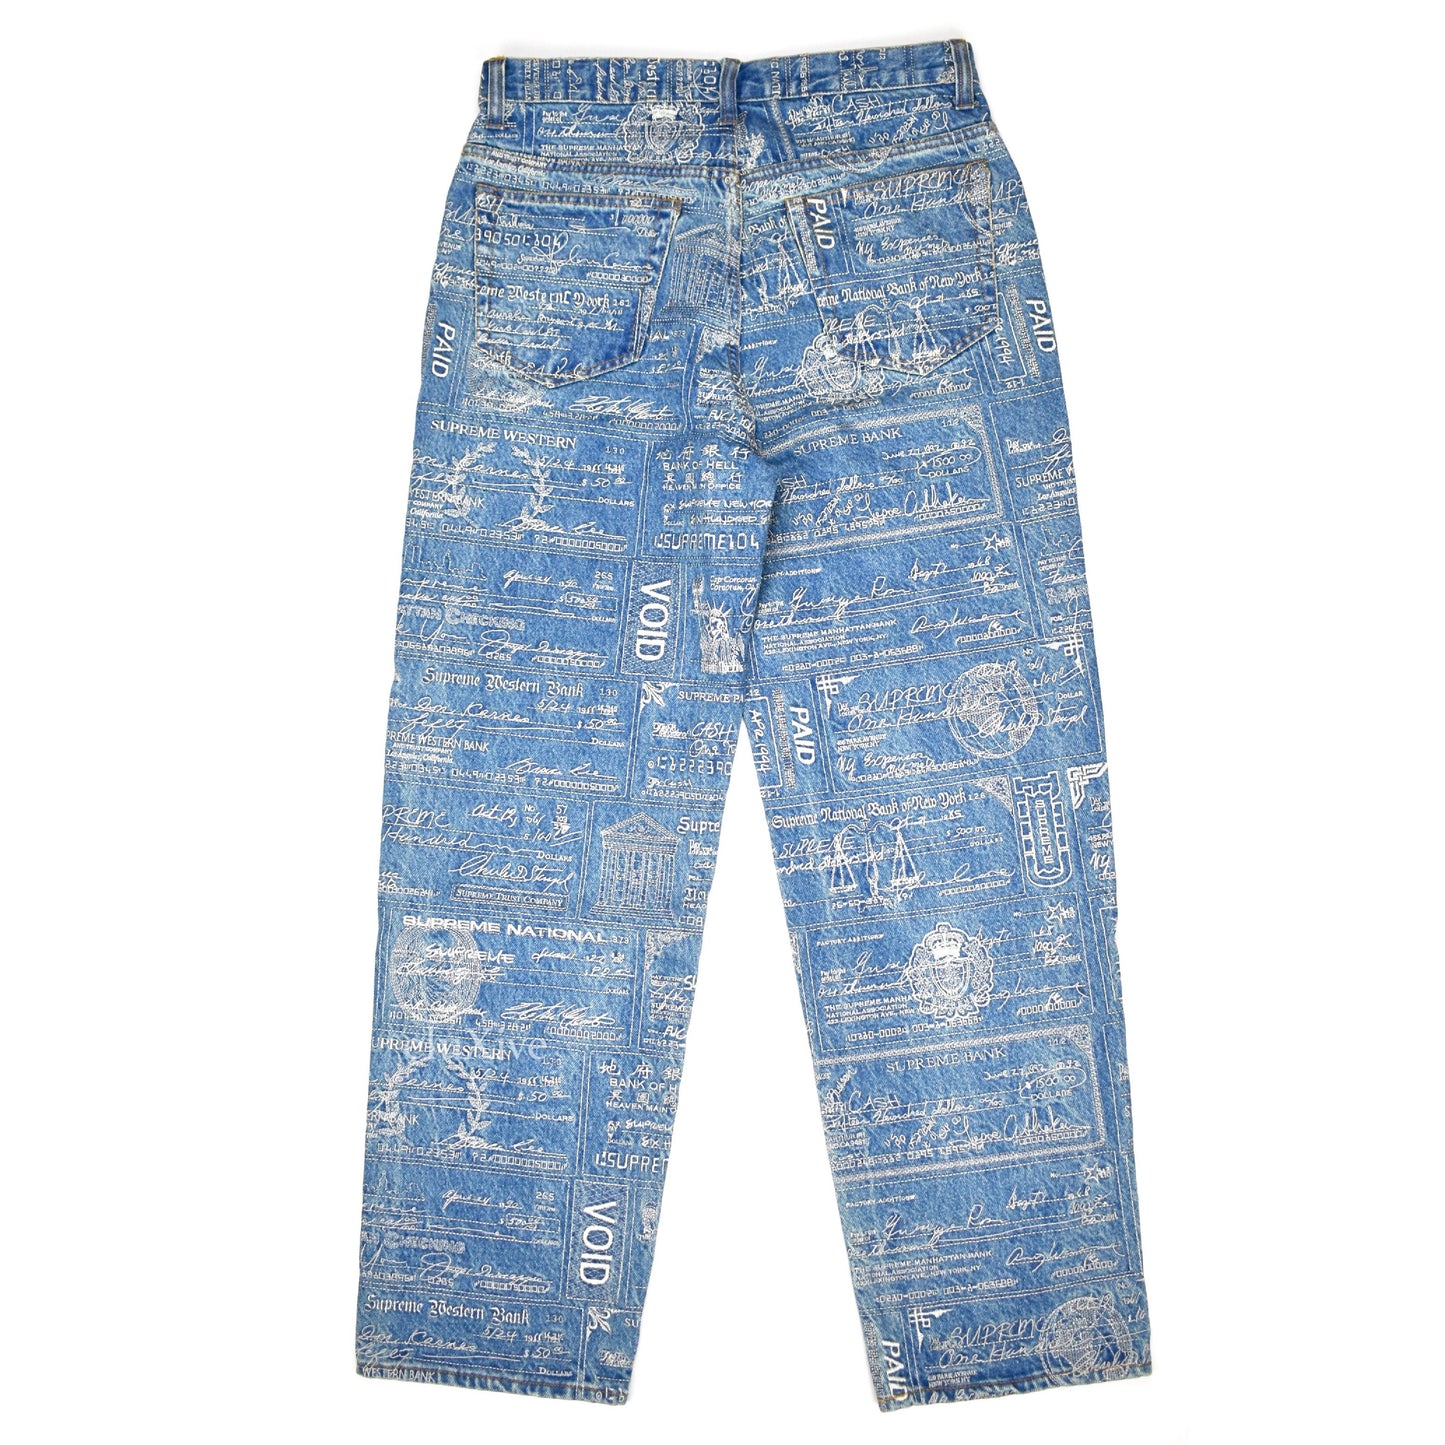 Supreme - Checks Embroidered Blue Denim Jeans